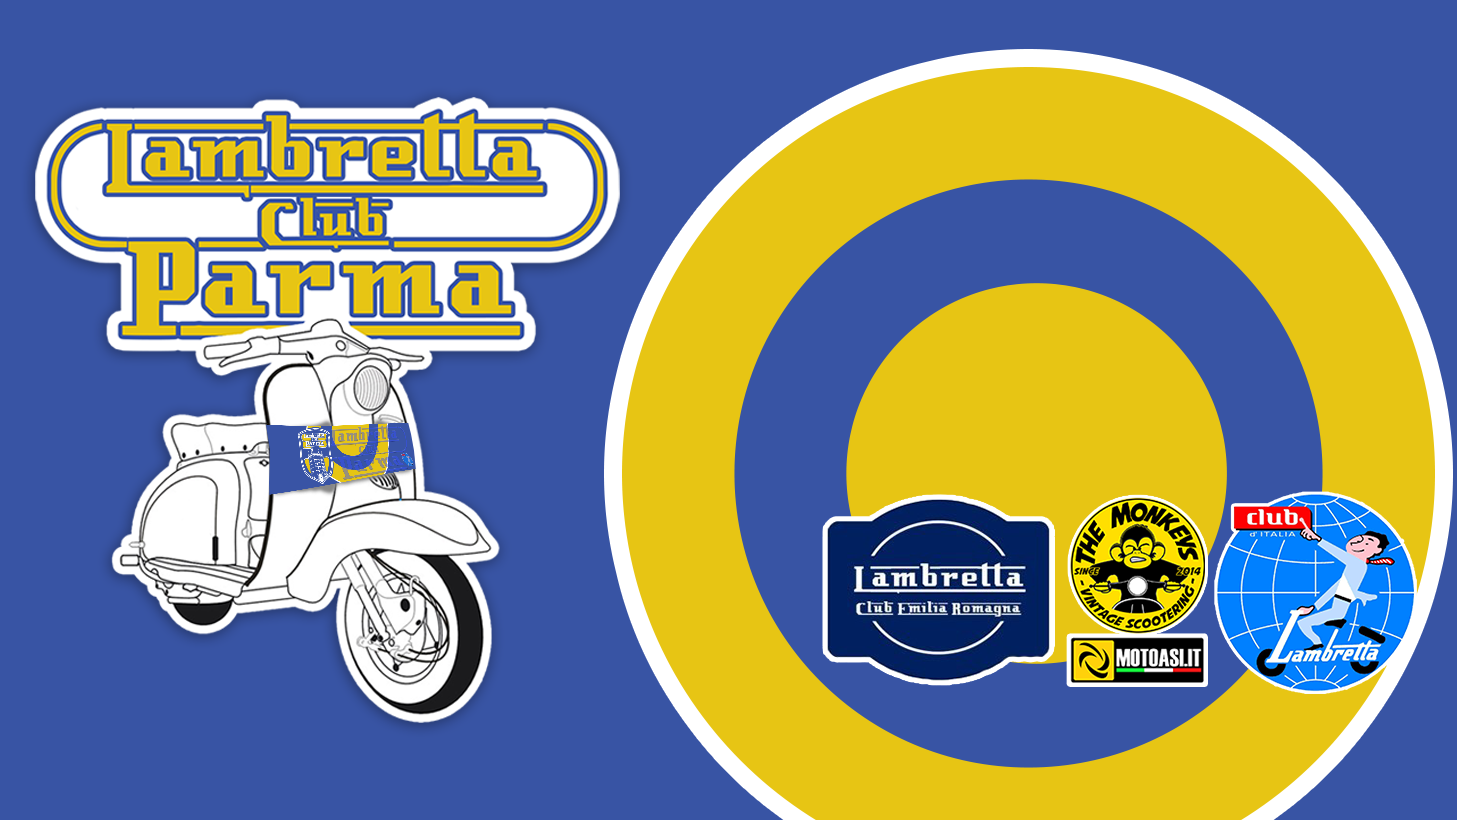 Lambretta Club Parma